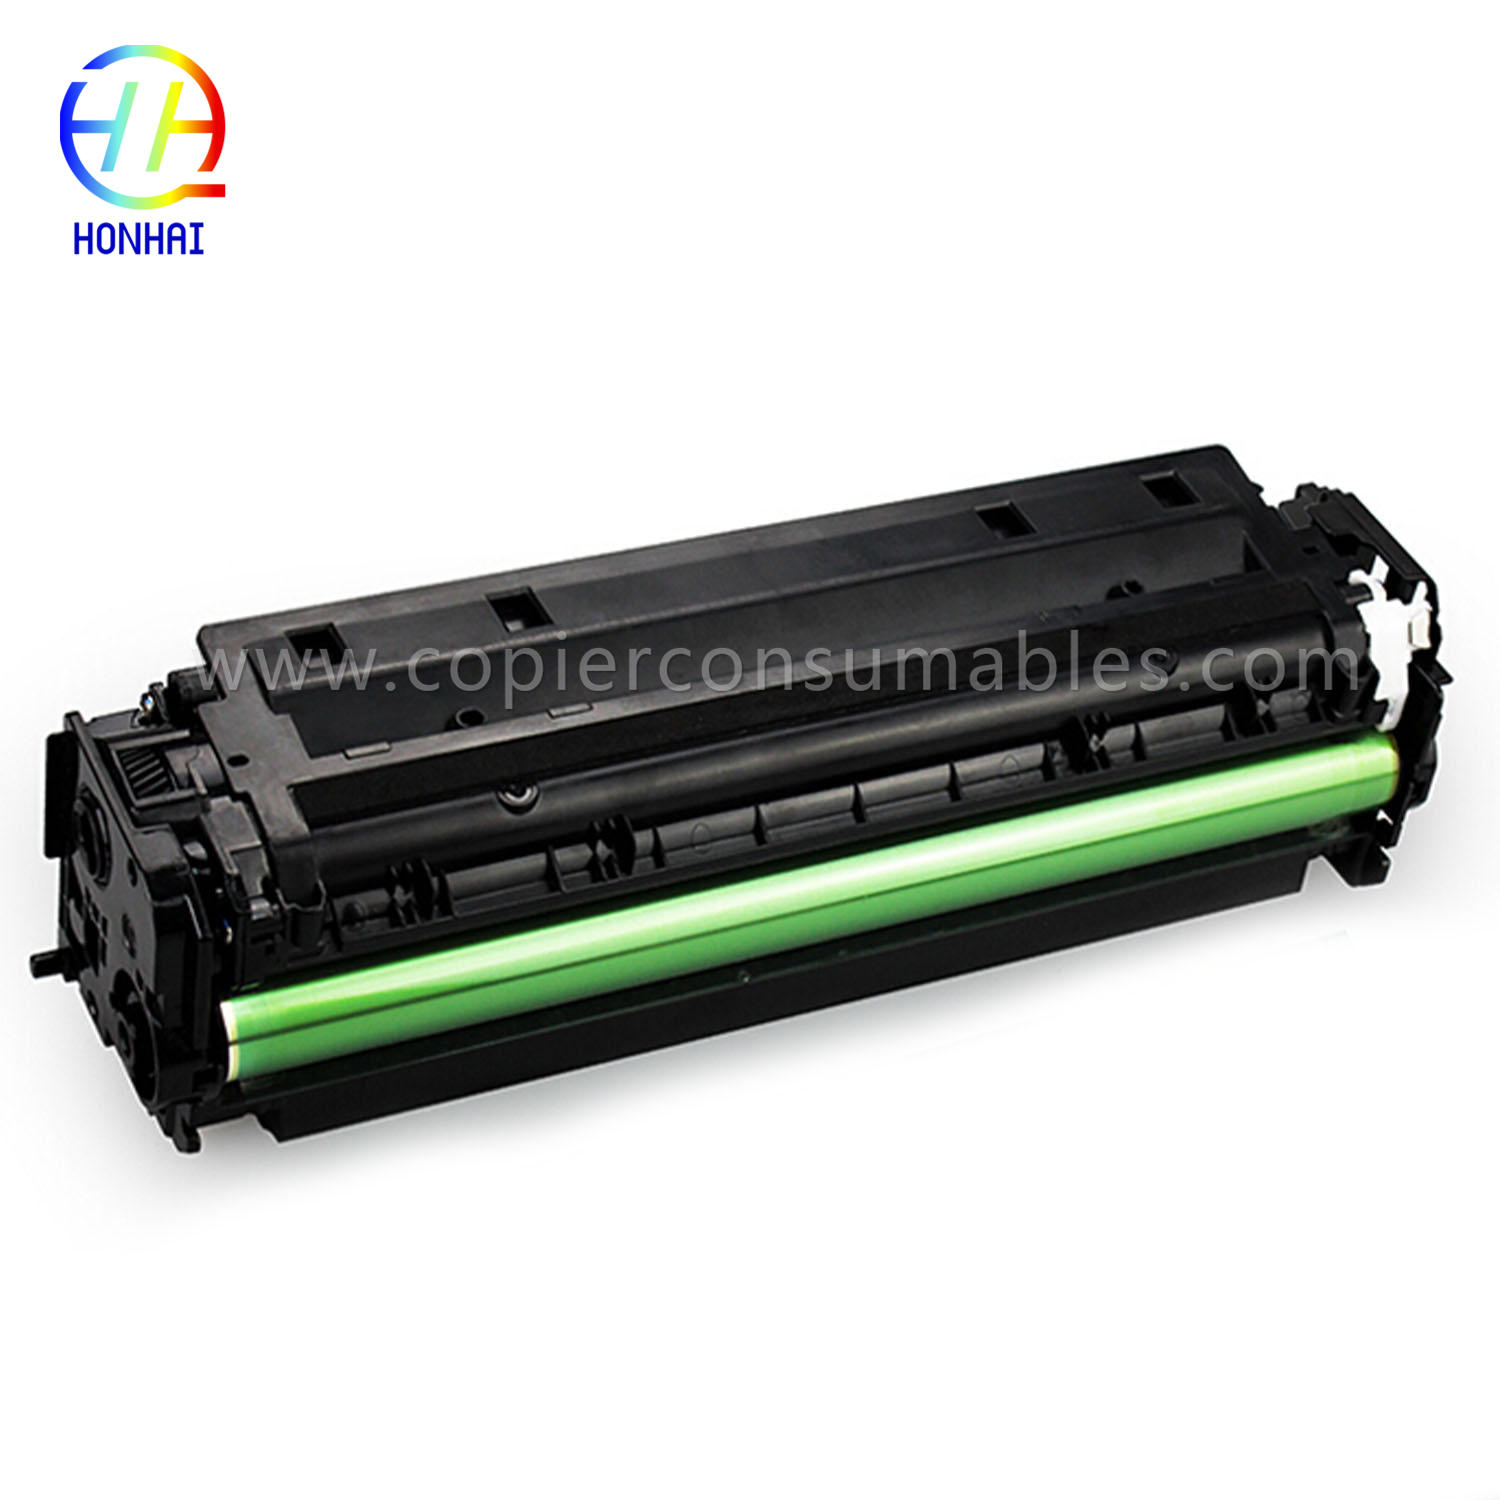 Hộp mực dùng cho máy in HP Laserjet PRO 400 Color Mfp M451nw M451DN M451dw PRO 300 Color Mfp M375nw (CE410A) (2)